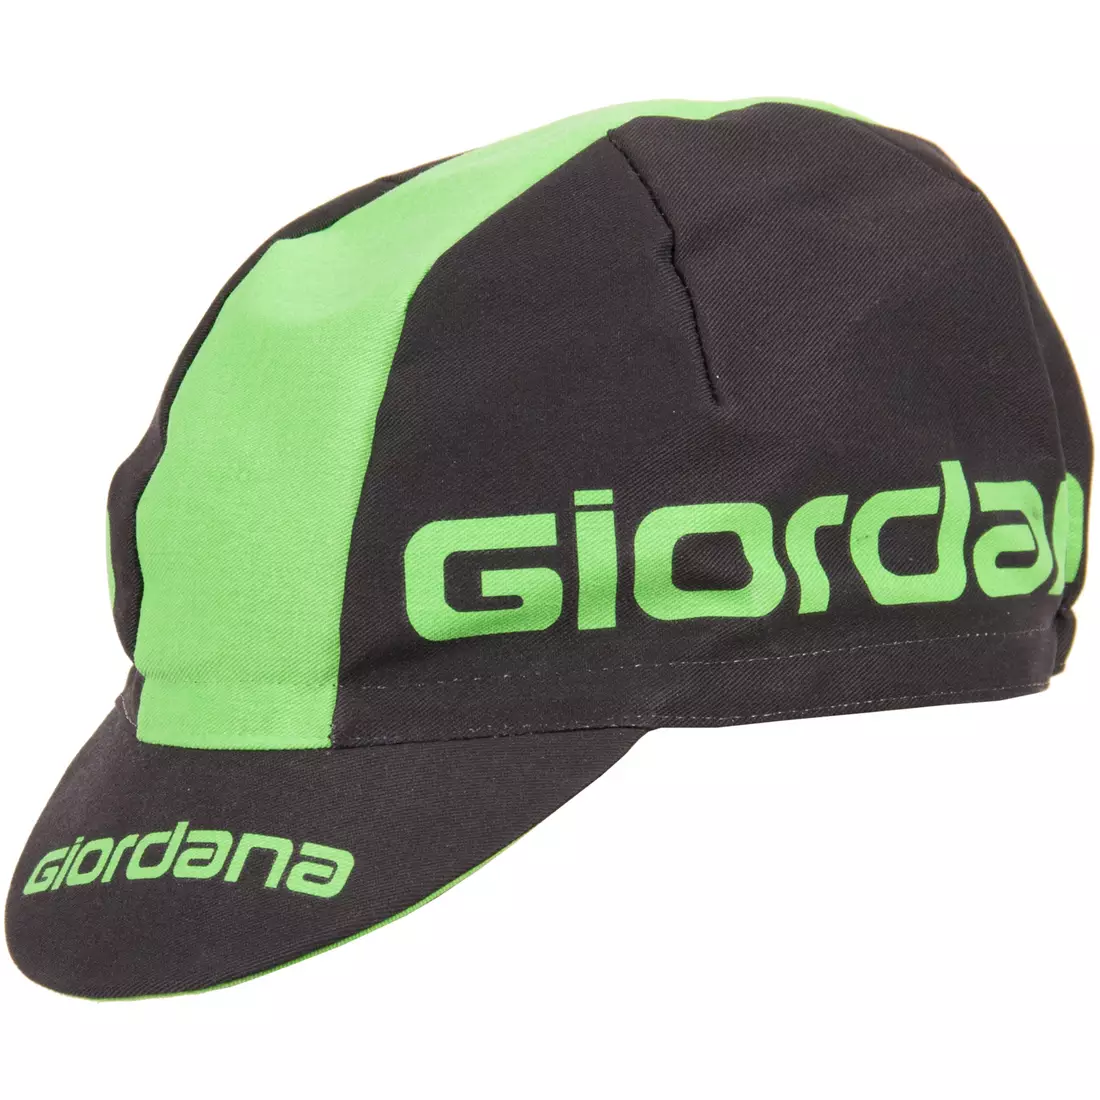 GIORDANA SS18 kerékpáros sapka - Giordana logó - fekete/Fluo zöld GI-S5-COCA-GIOR-BKFL egy méret